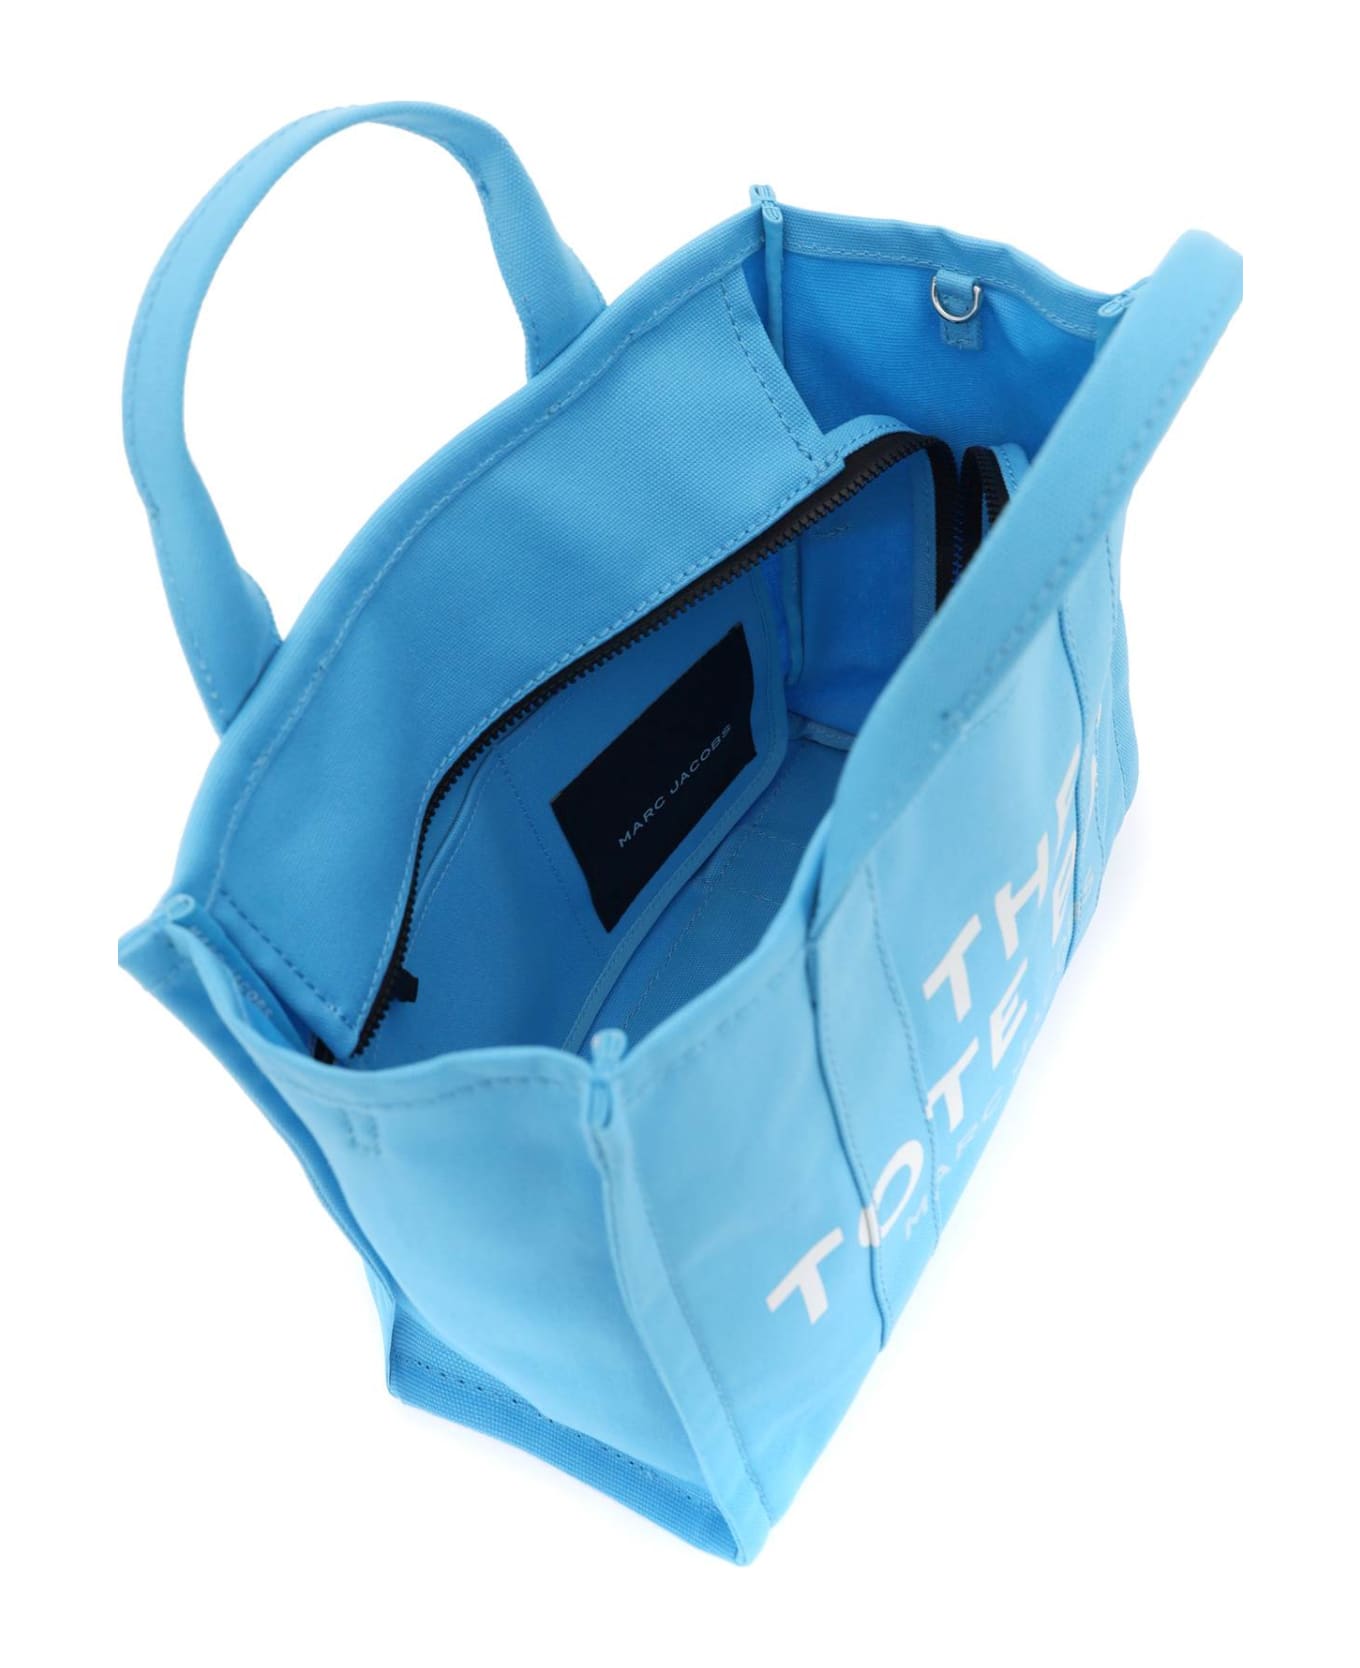 Marc Jacobs The Medium Tote Bag - Light blue トートバッグ